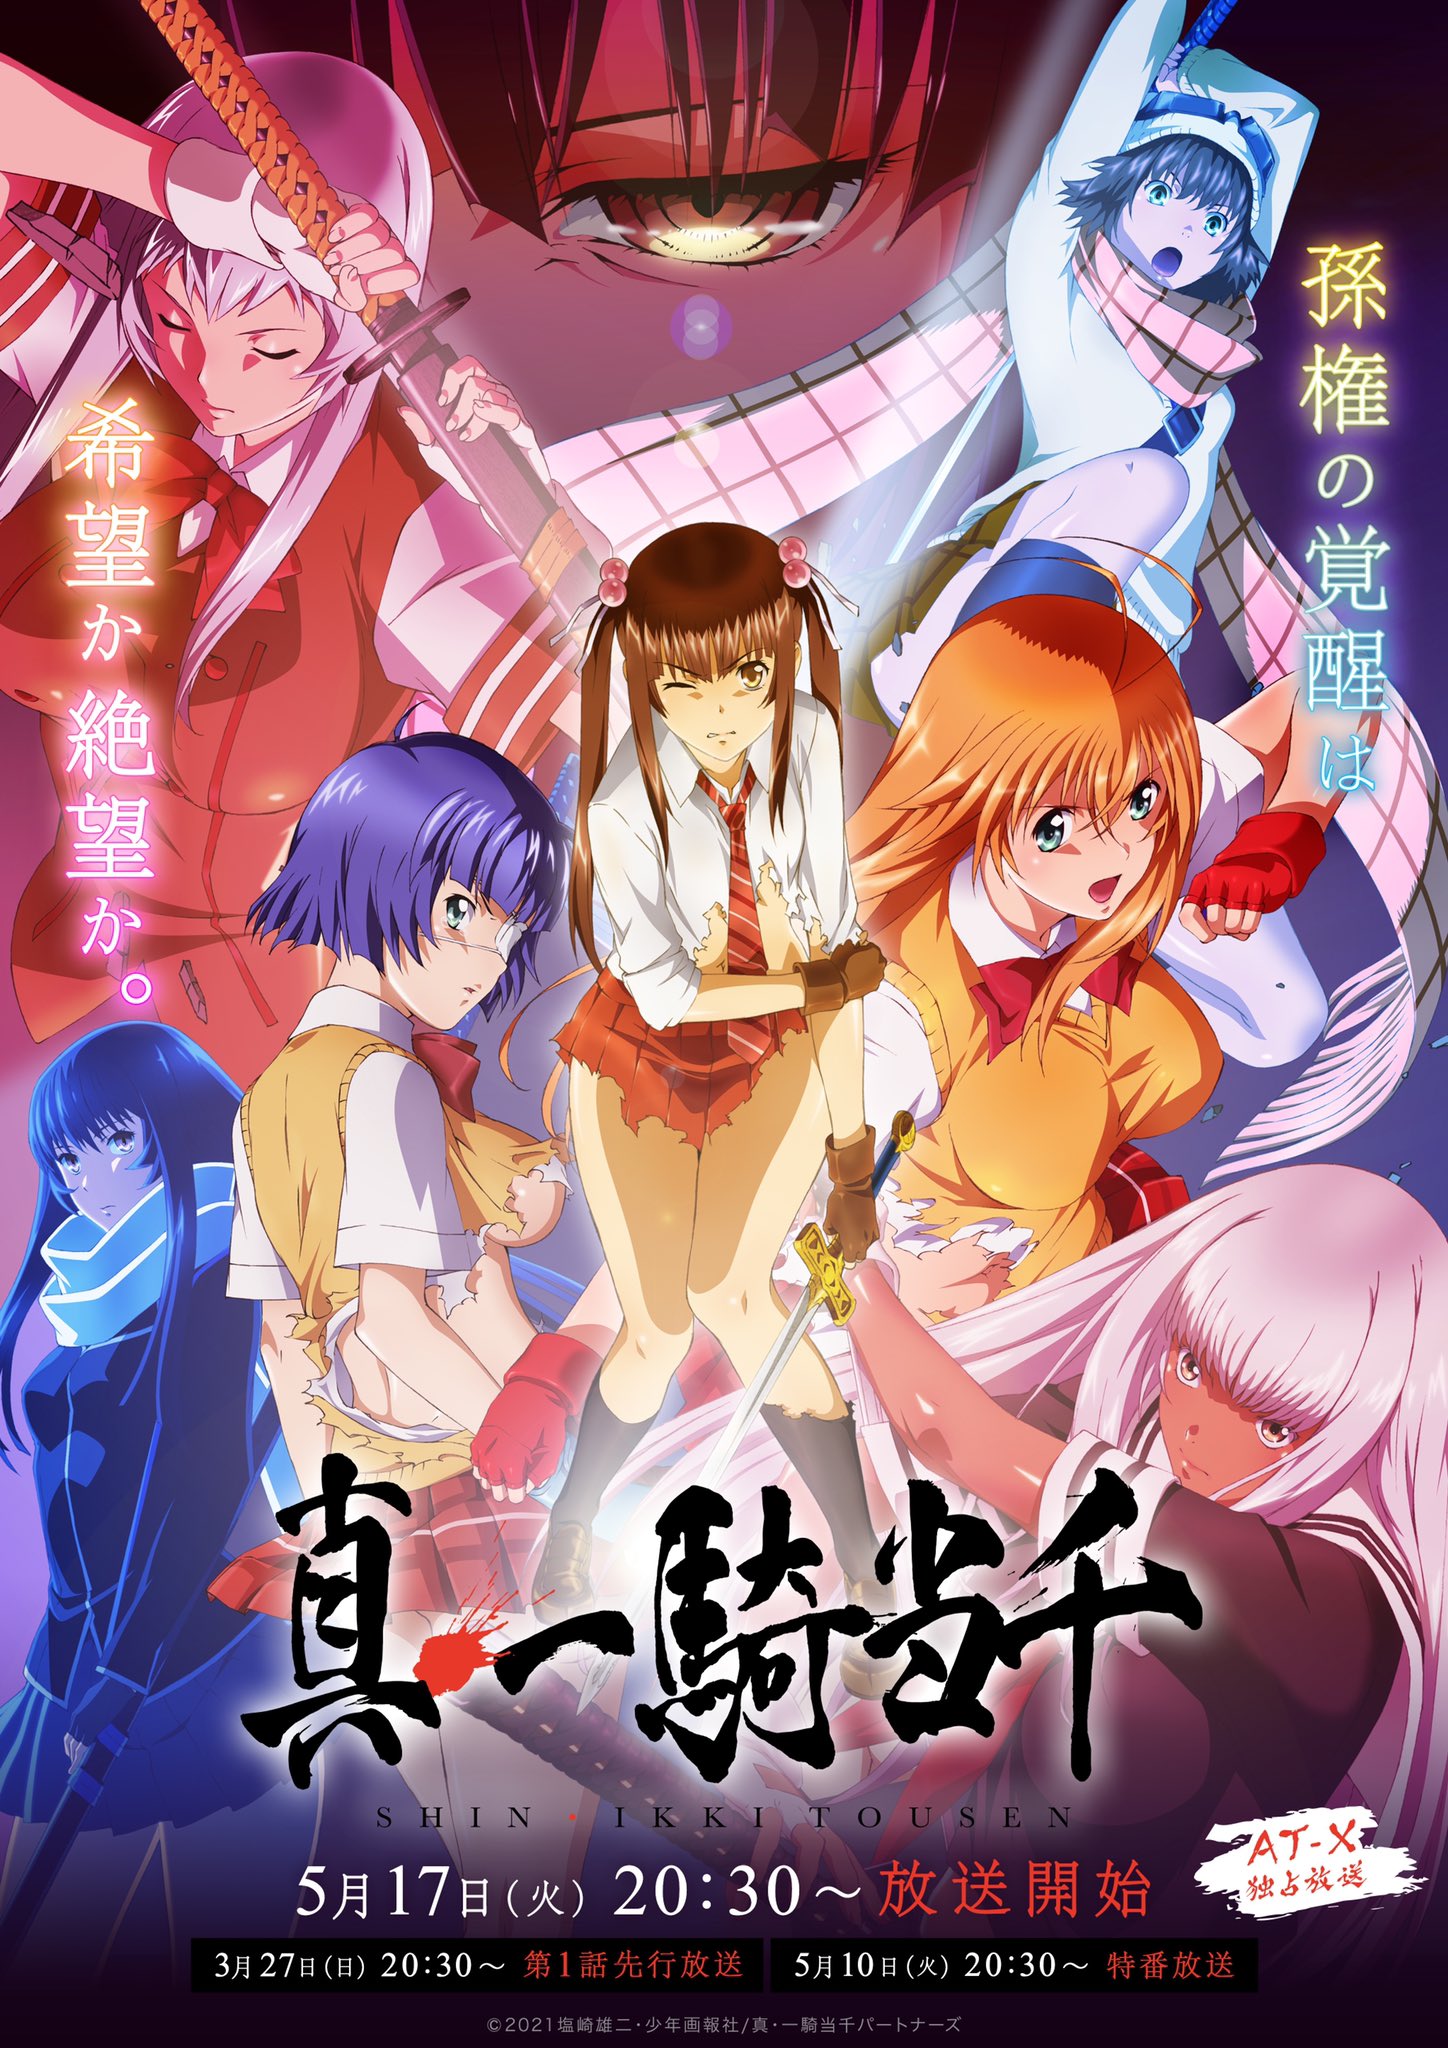 Shin Ikkitousen – New Battle Vixens, Dragon Girls, Ikki Tousen